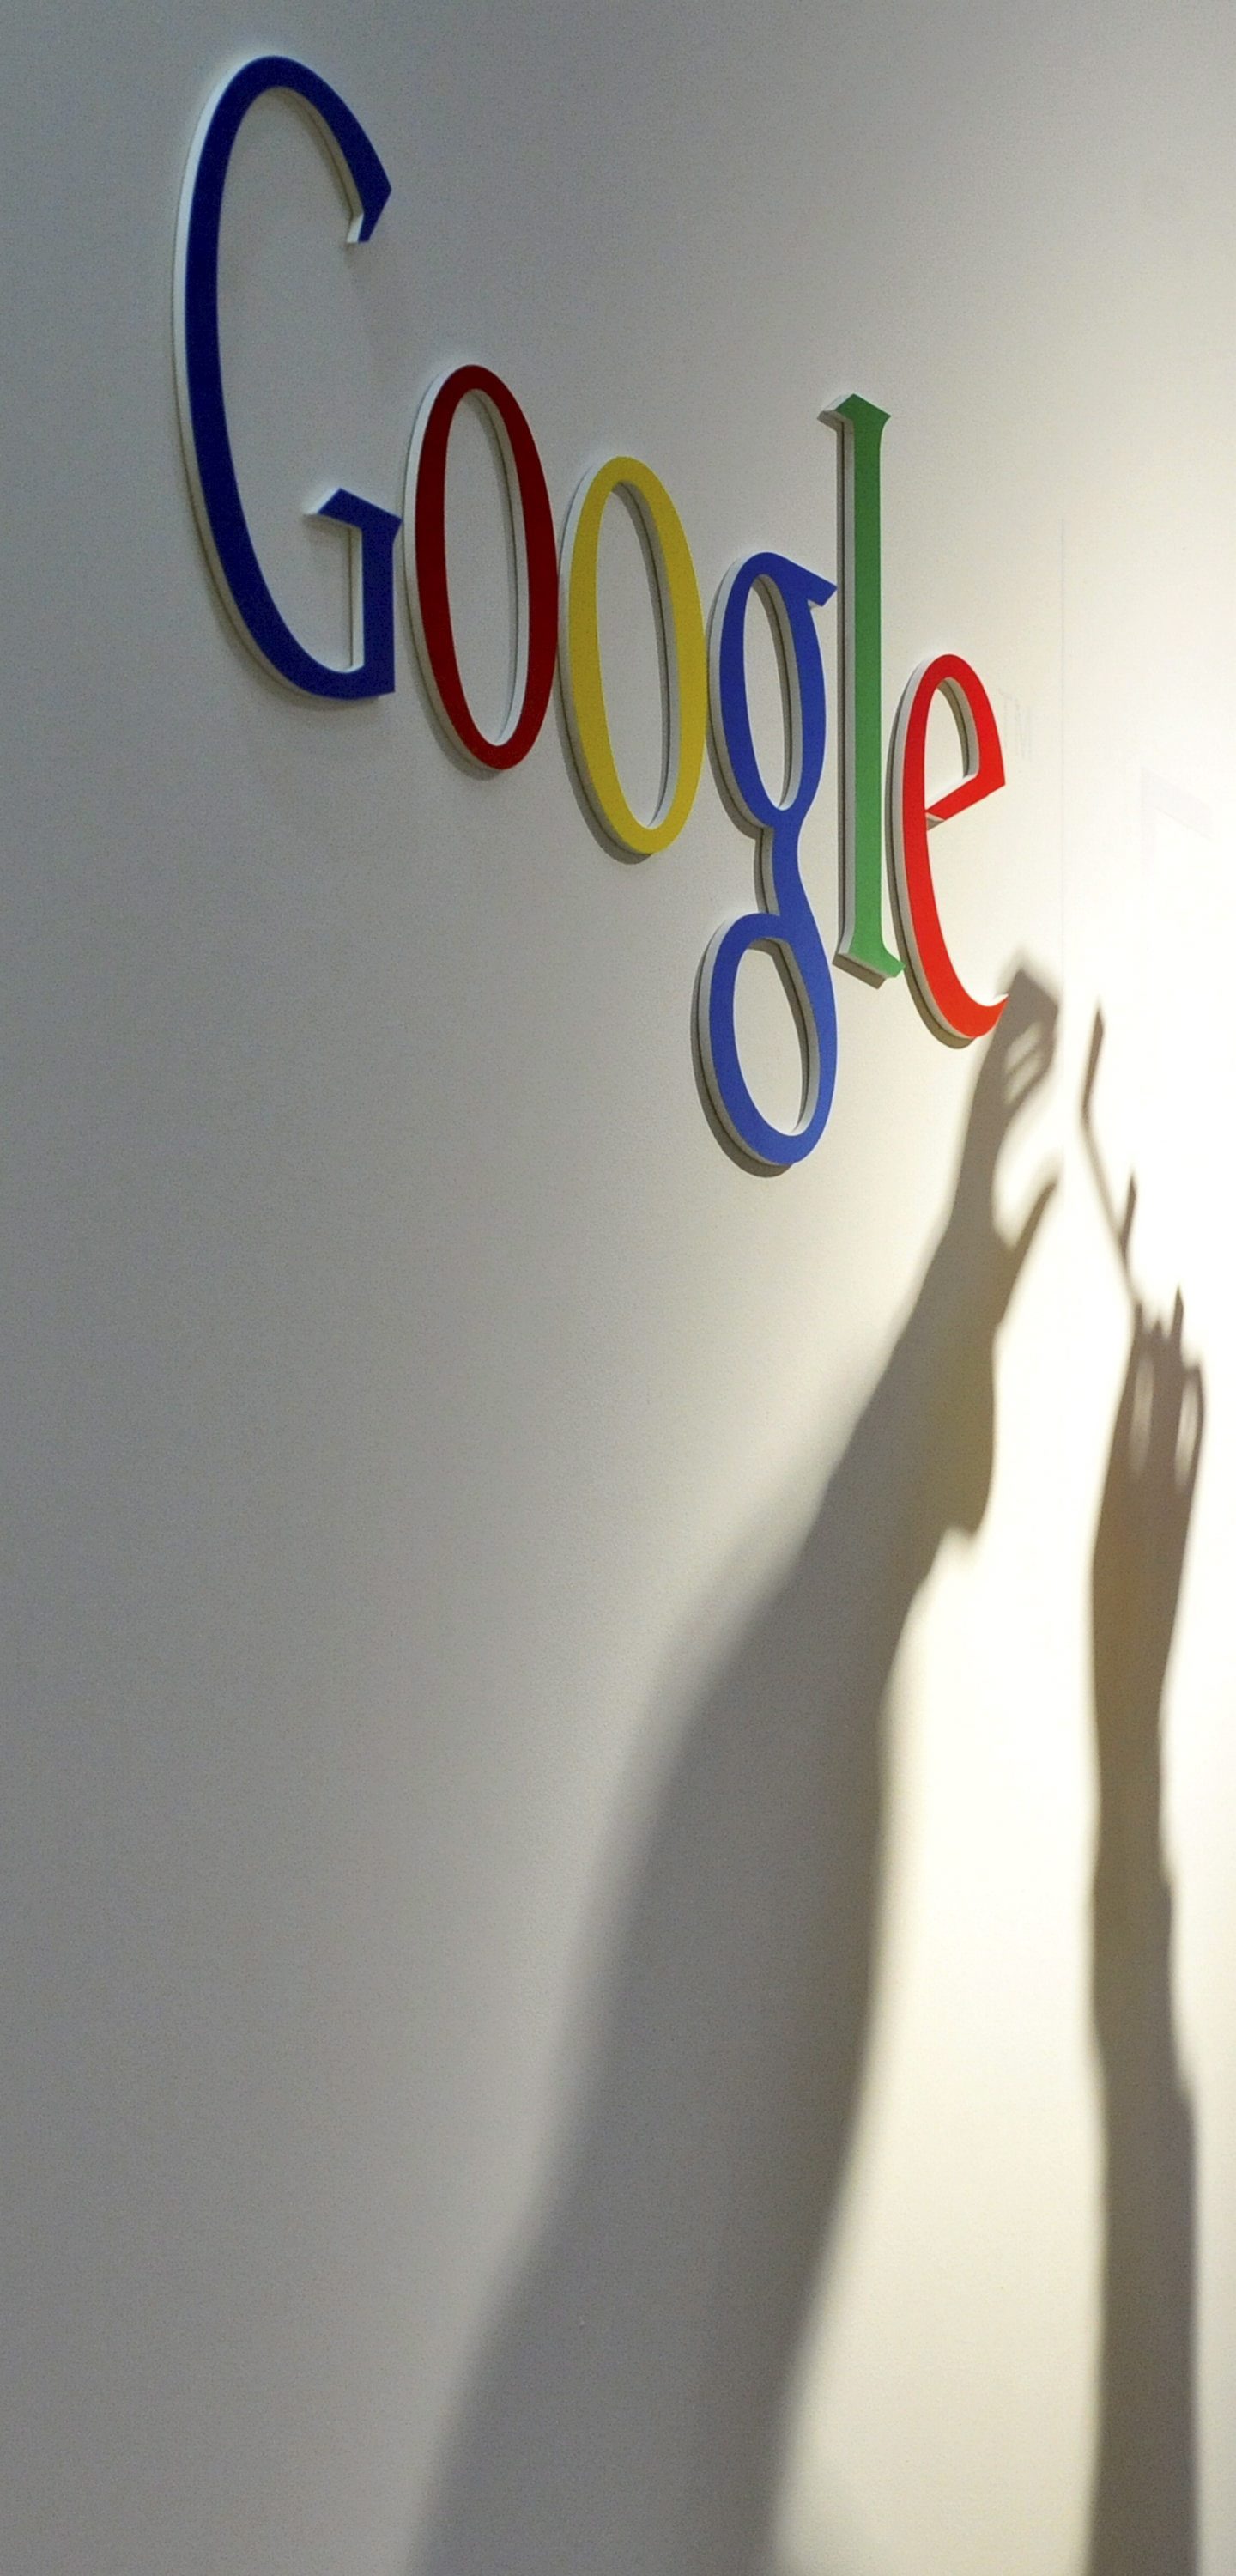 Google похарчил $17 млрд. за придобивки